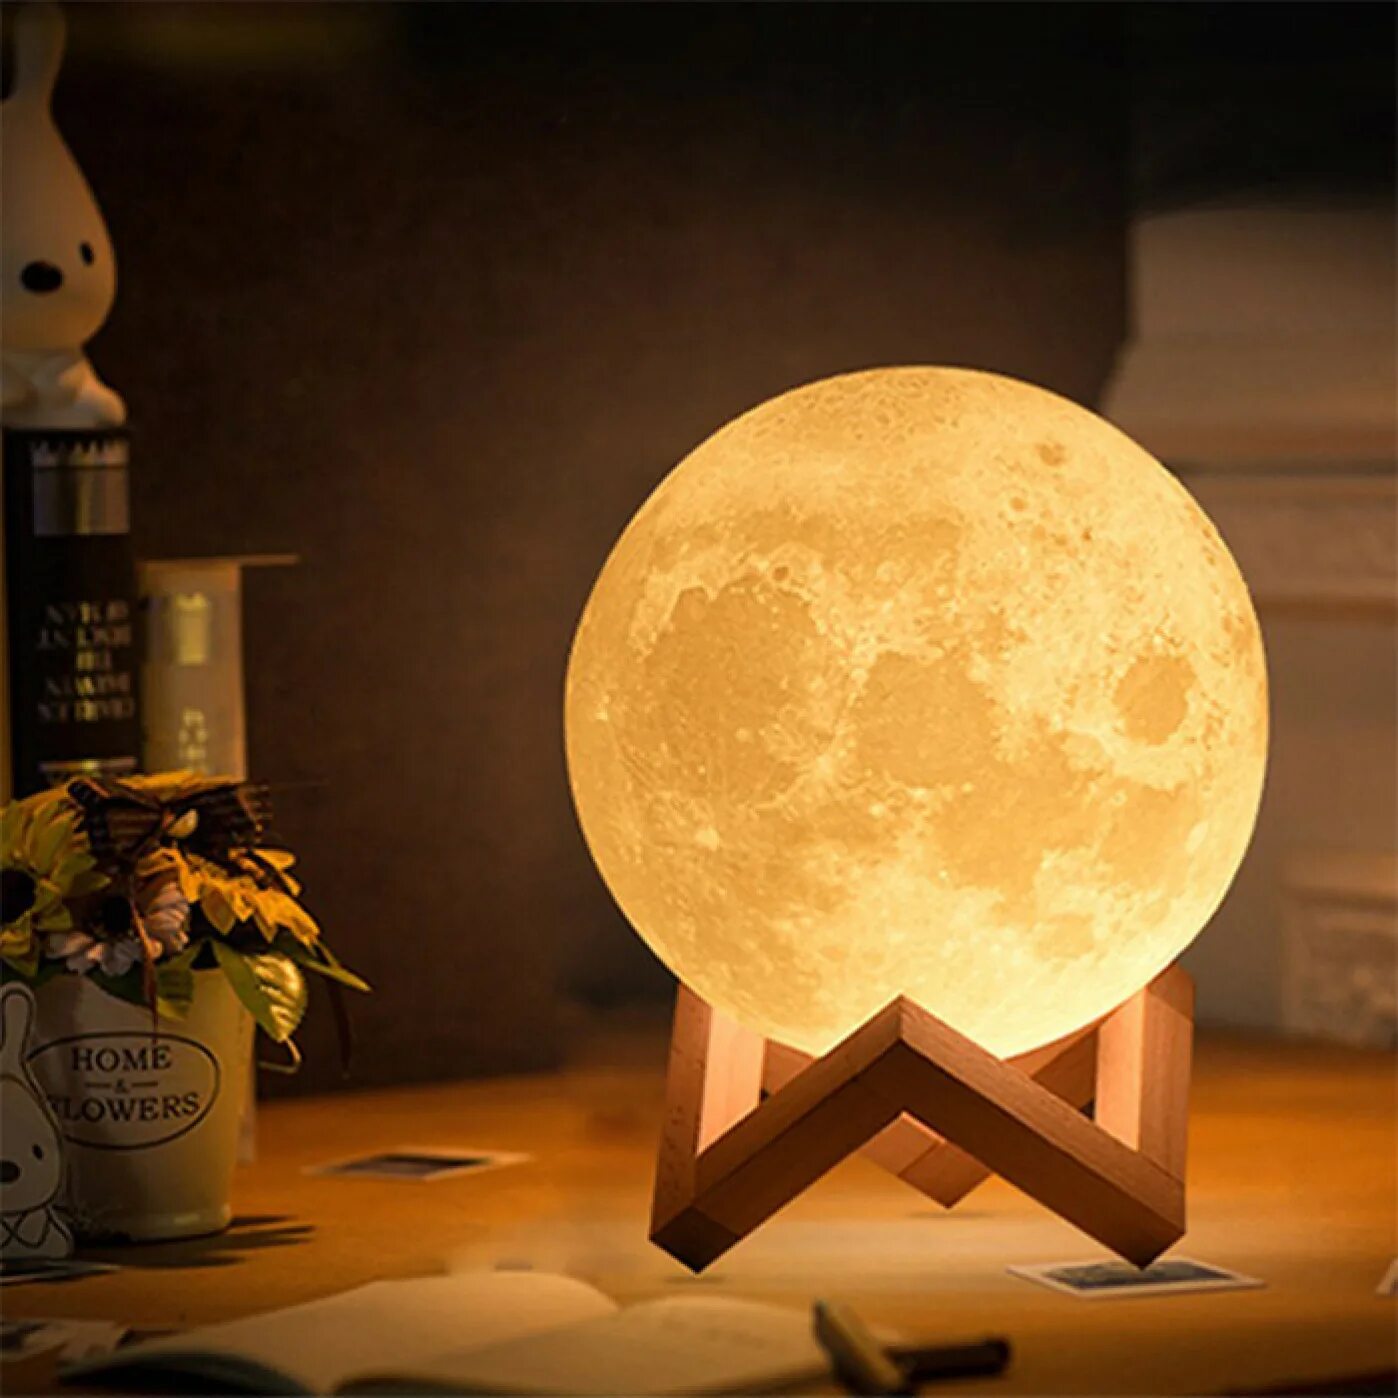 Lune купить. Светильник Луна 3 д Moon Lite. Ночник Луна Moon Lamp. Светильник Moon Lamp 3d. Светильник ночник Луна 15 см.